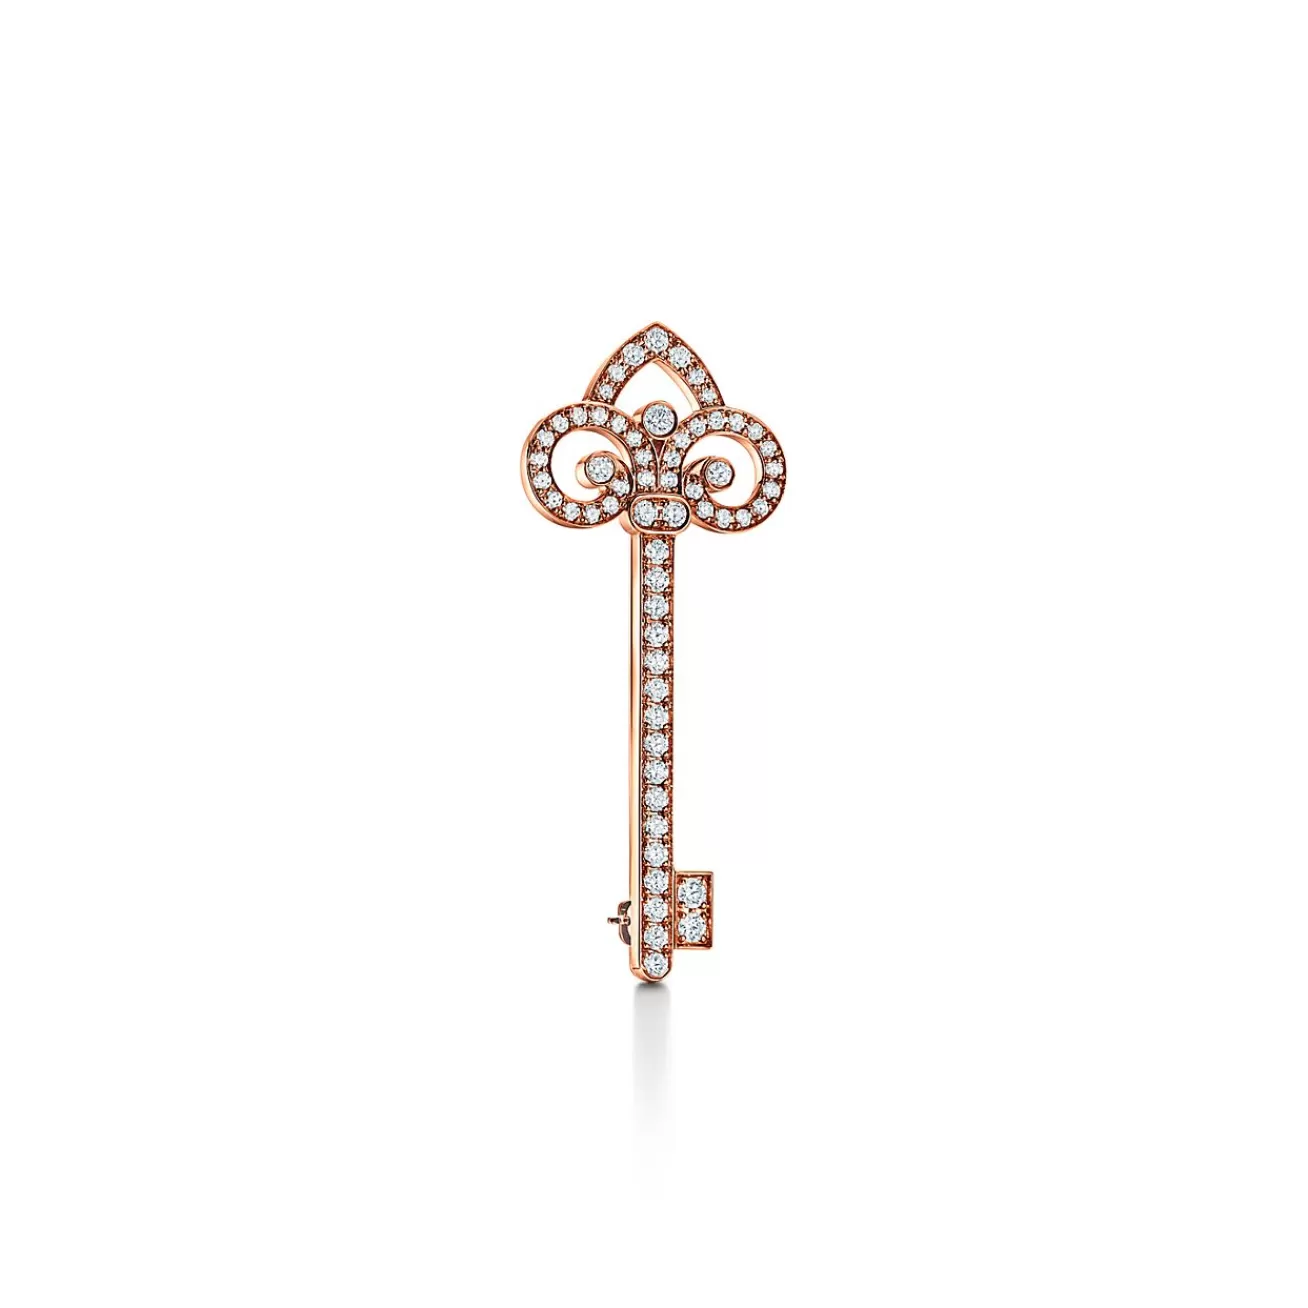 Tiffany & Co. Tiffany Keys Fleur de Lis Key Brooch in Rose Gold with Diamonds | ^ Brooches | Rose Gold Jewelry